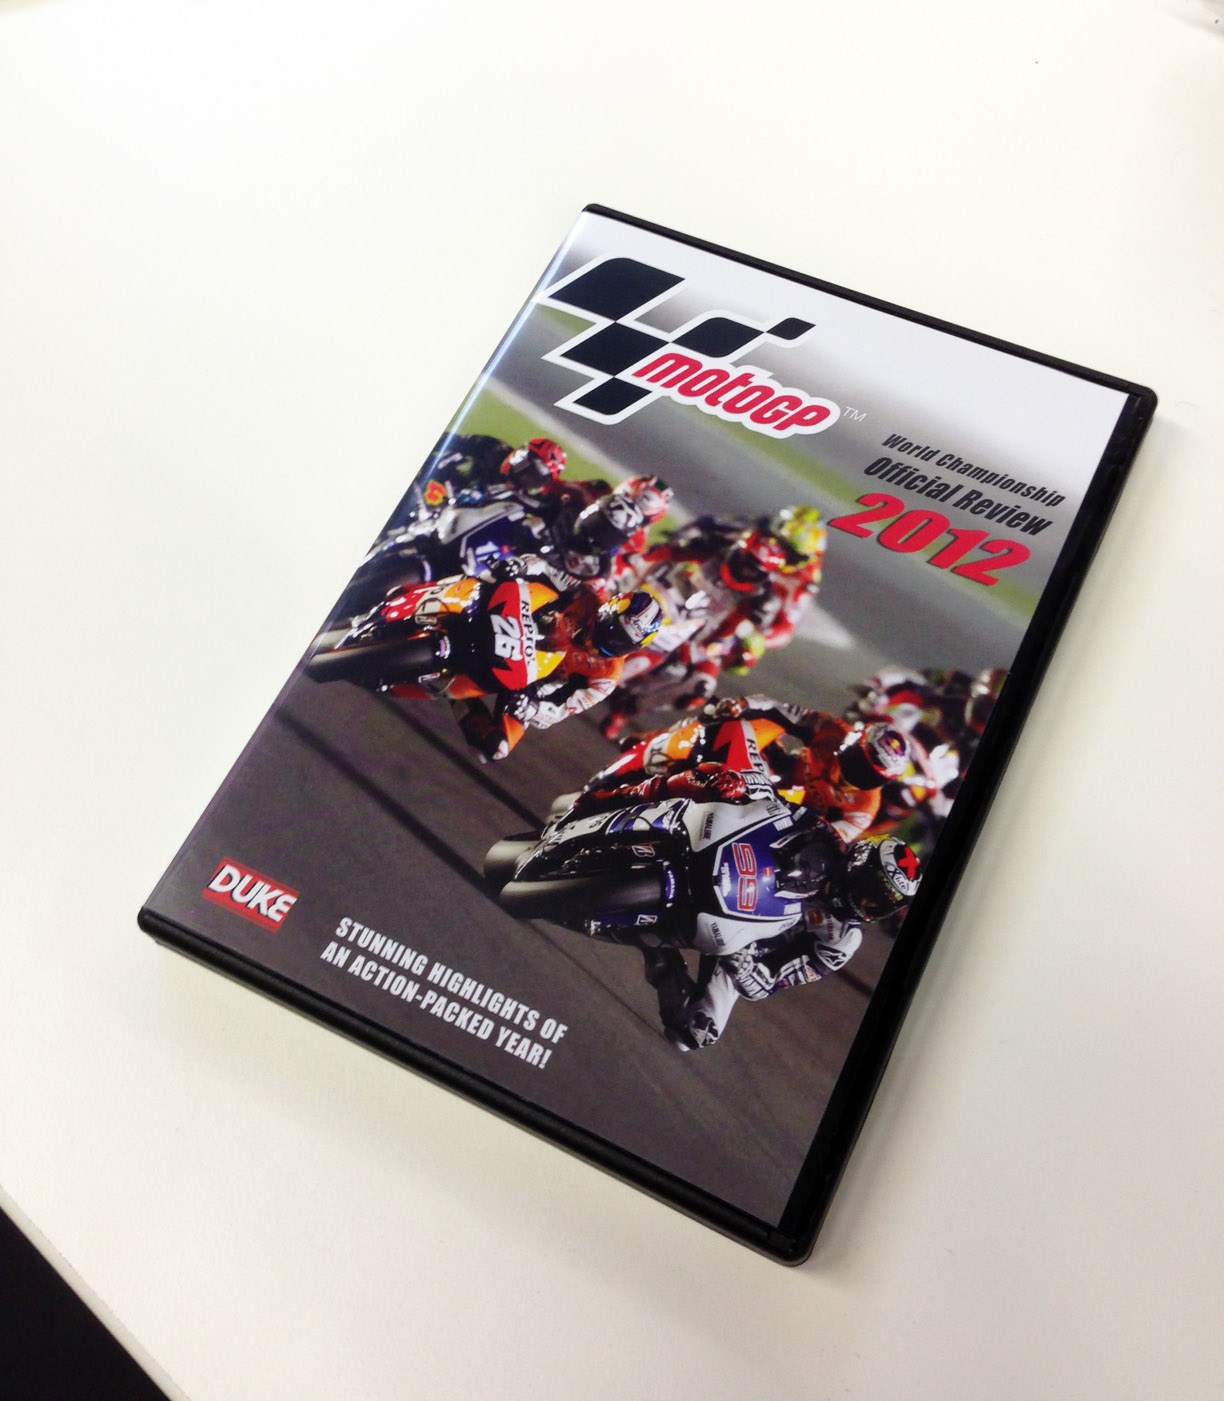 New: MotoGP Official Season Review 2012 DVD